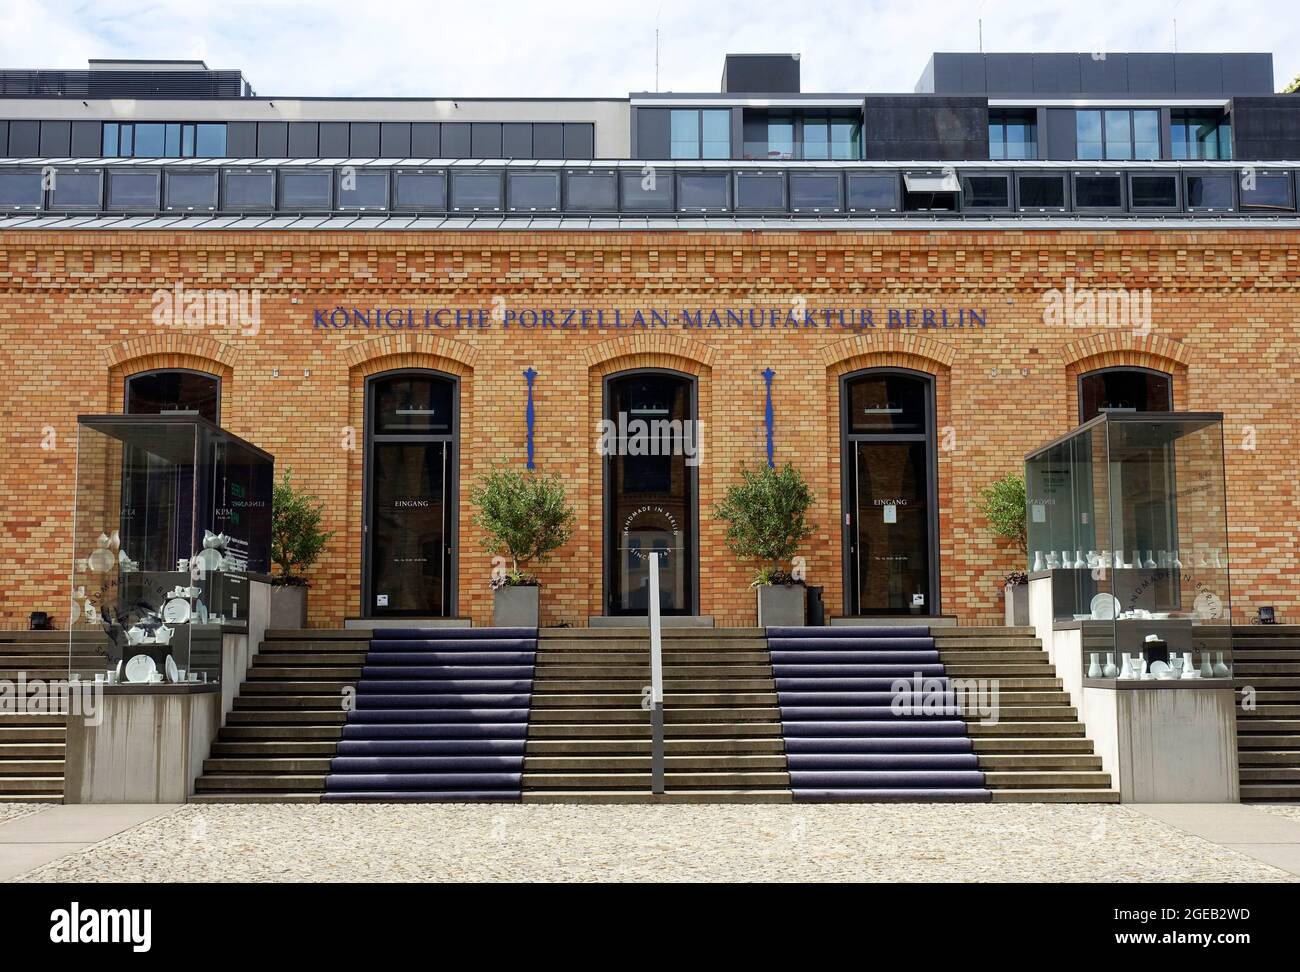 Royal Porcelain Factory, Berlin, Allemagne Banque D'Images